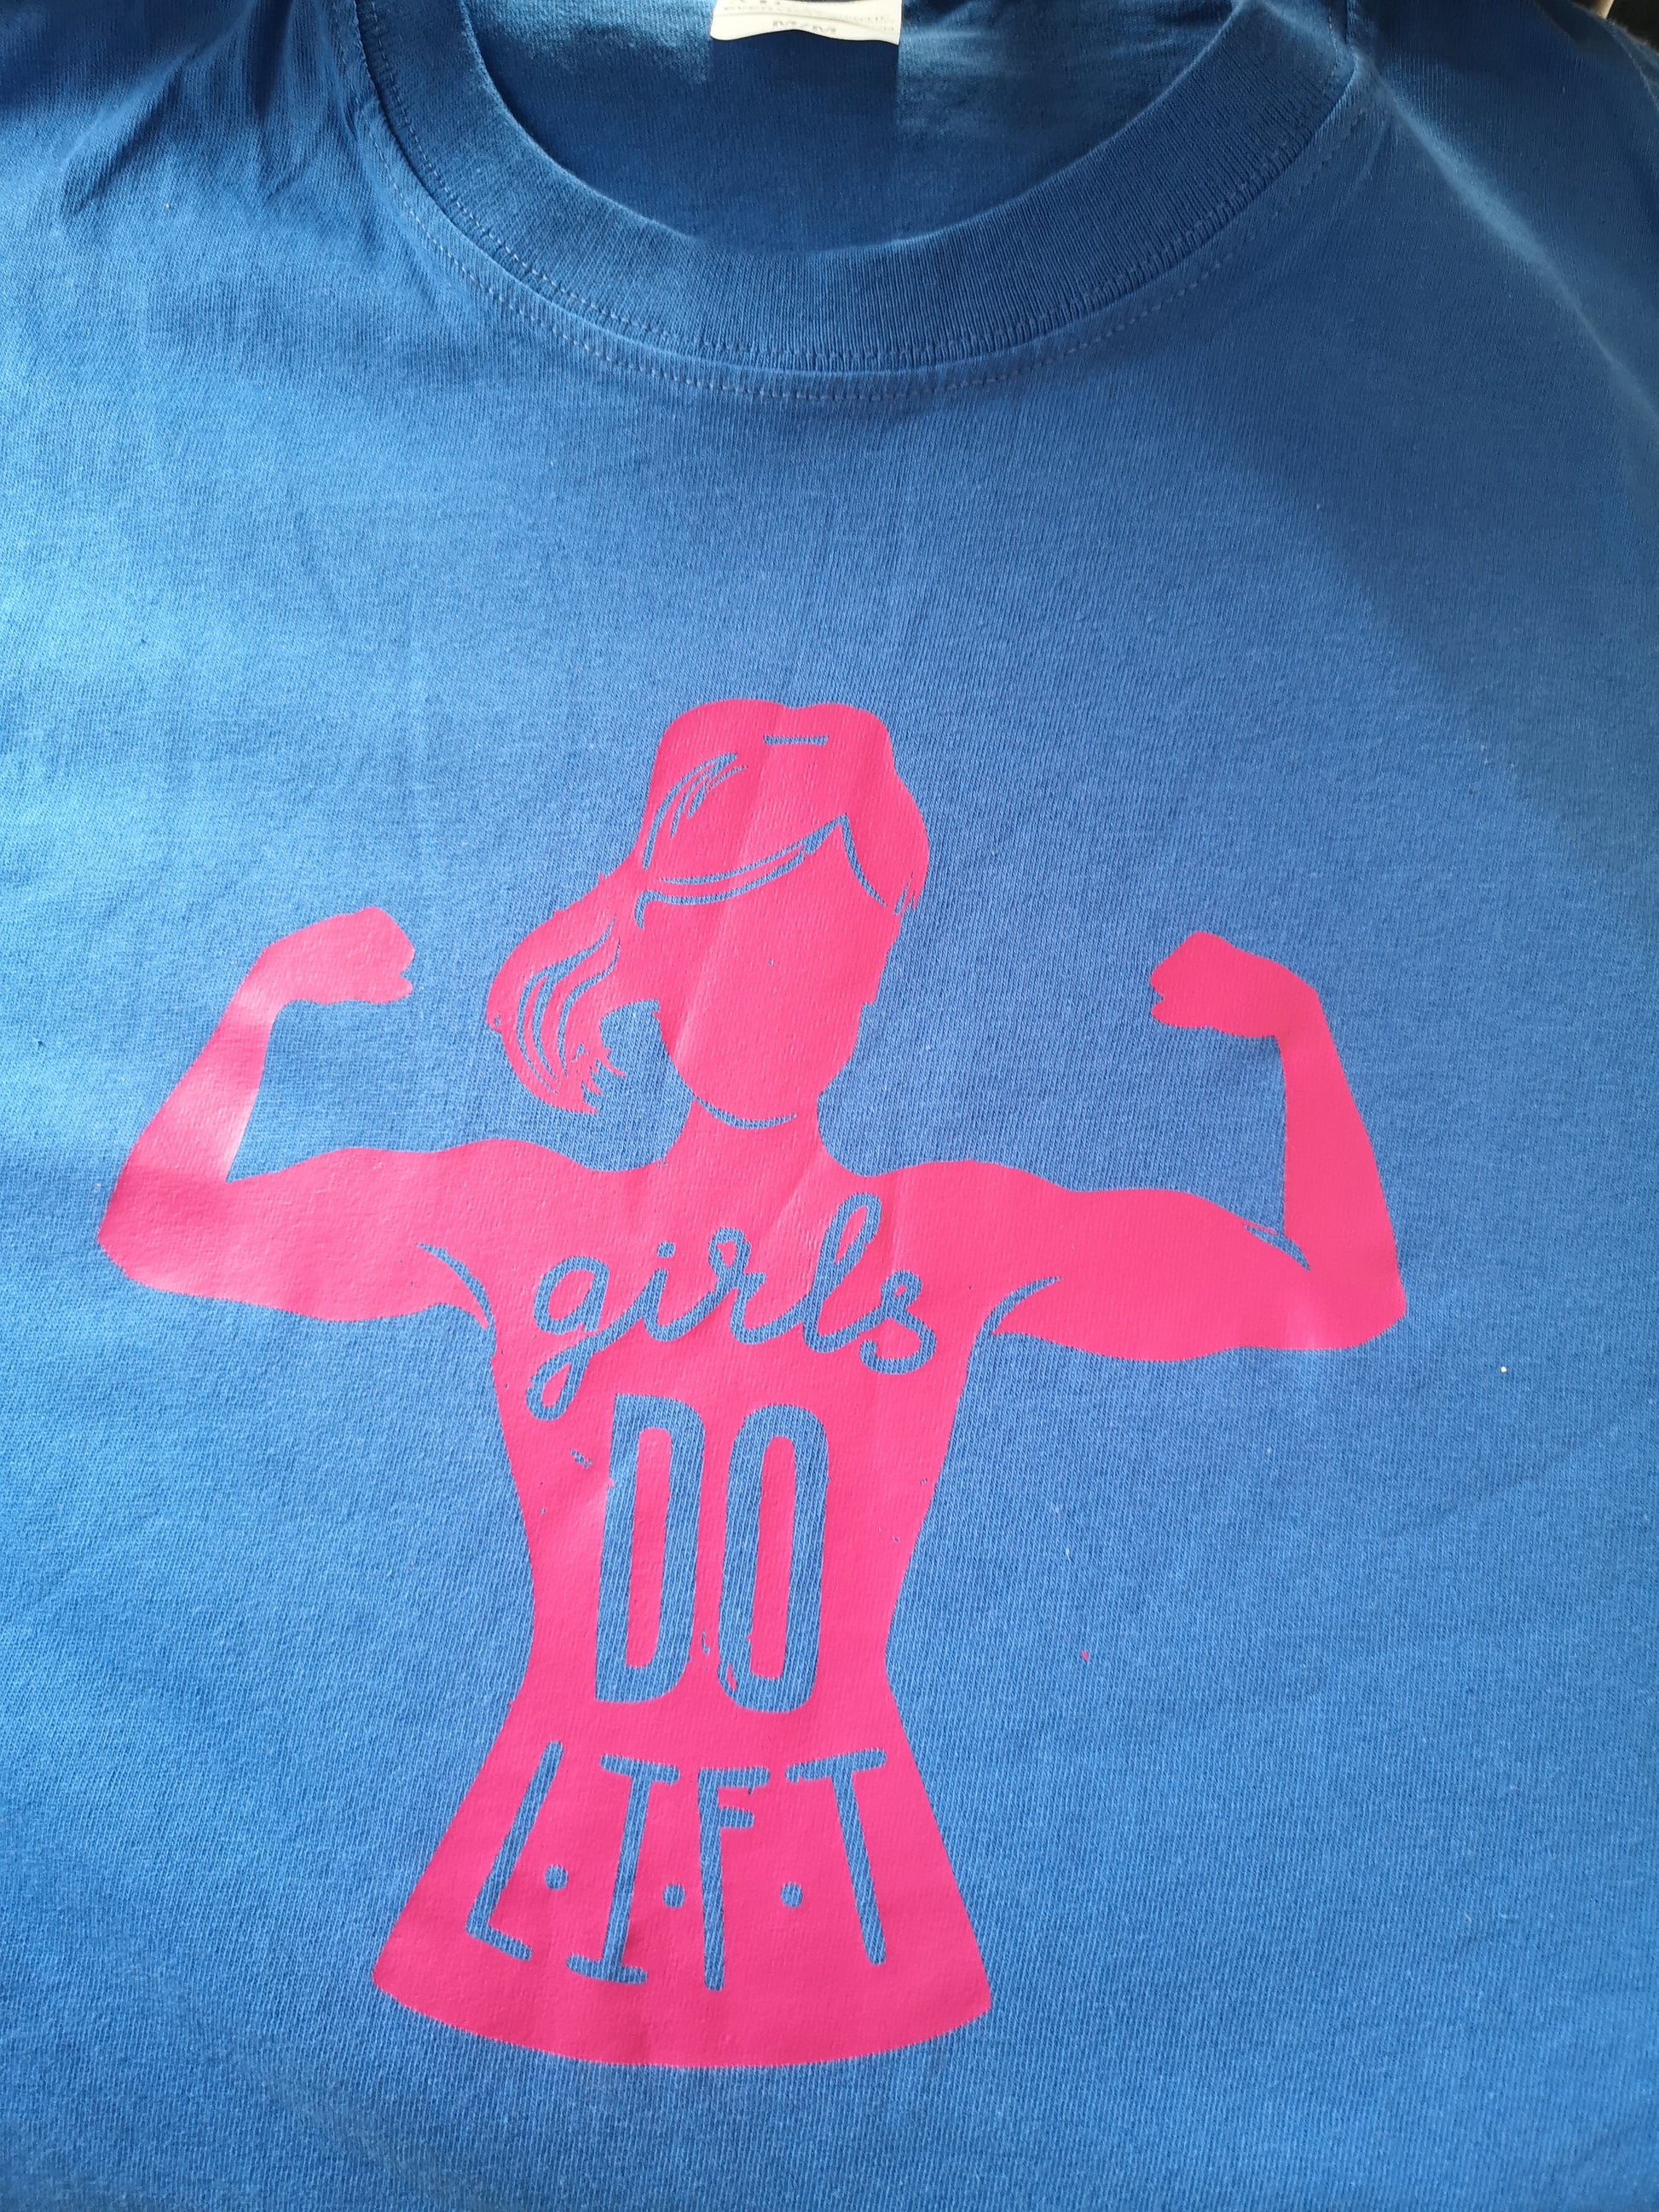 Resolute Unisex Tshirt - Girls Do - Resolute Strength Wear